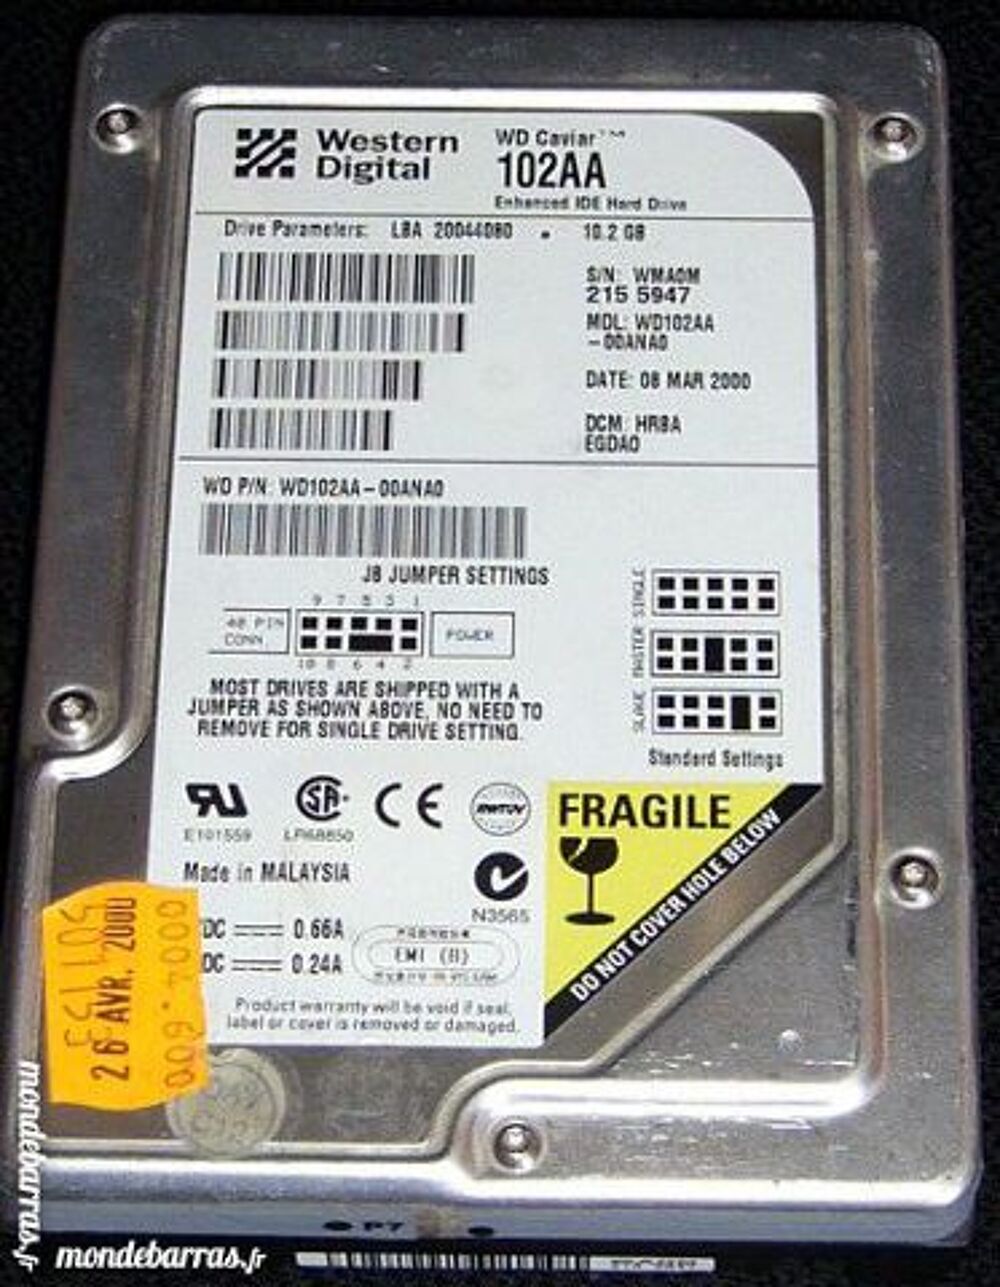 Disque dur ATA WD 102AA-3,5 10,2GB Matriel informatique